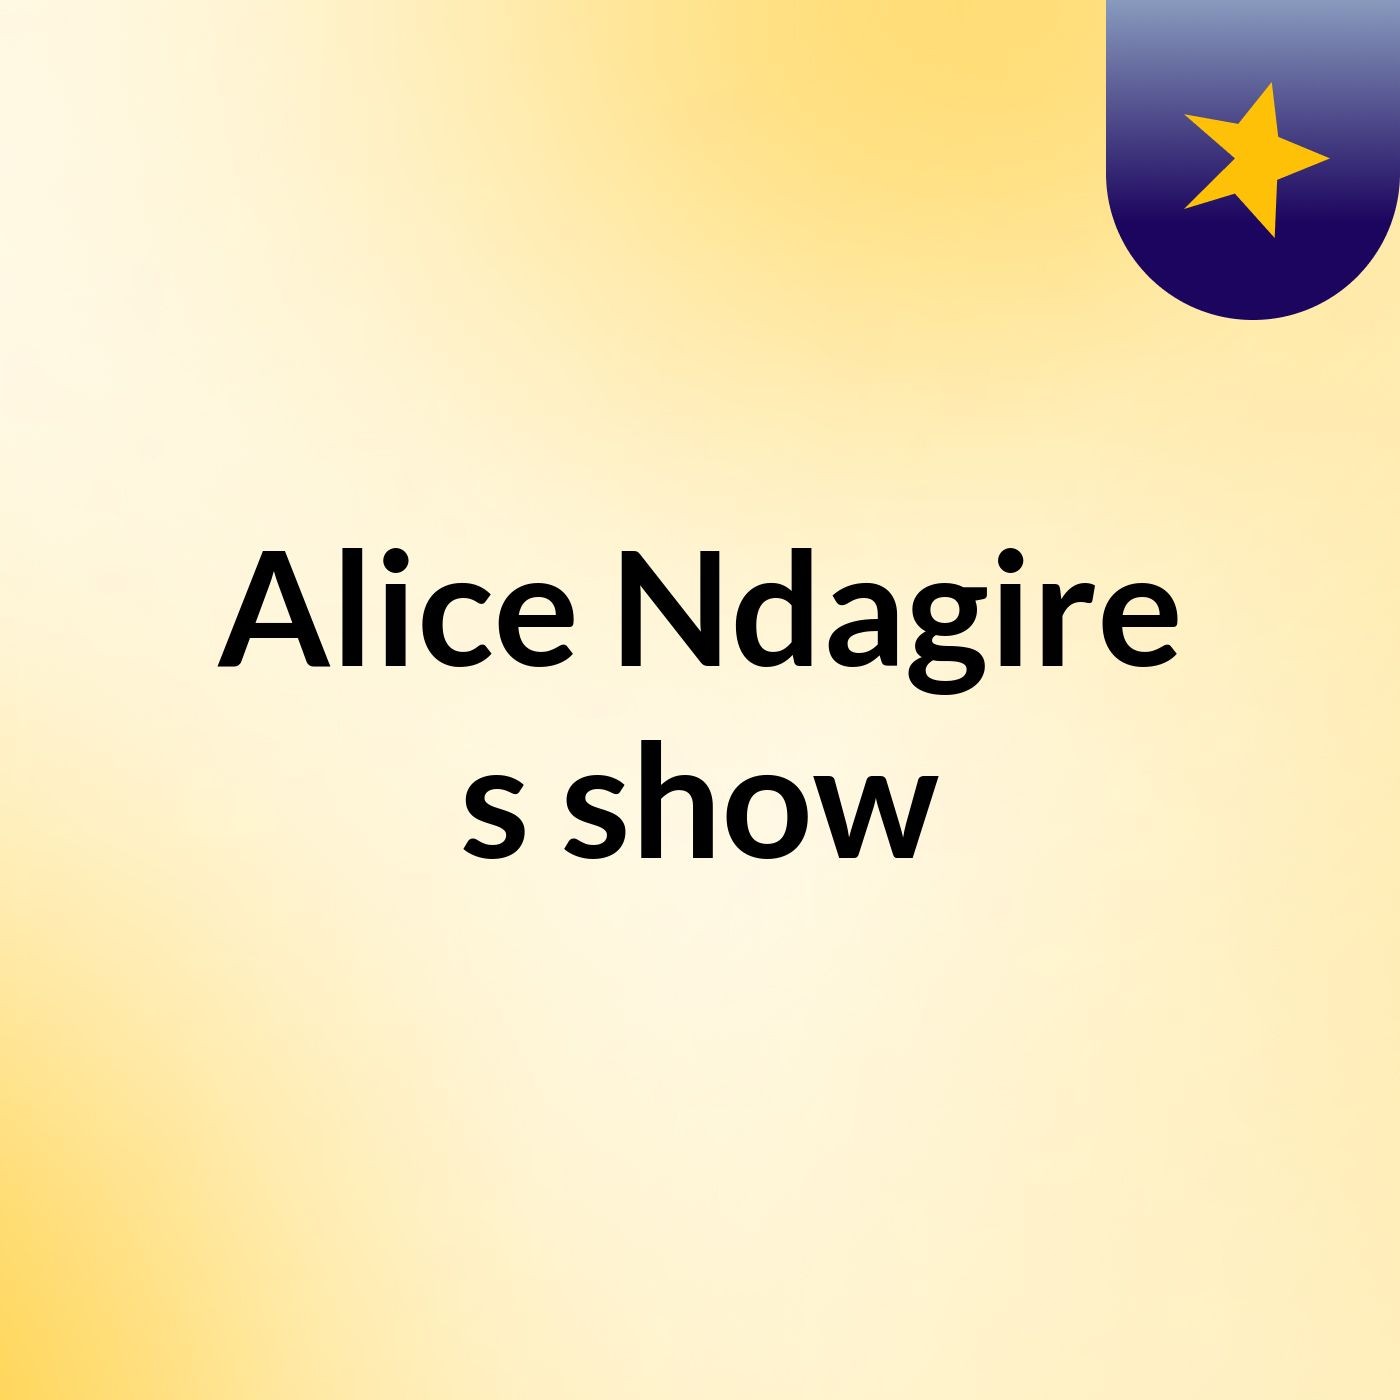 Alice Ndagire's show